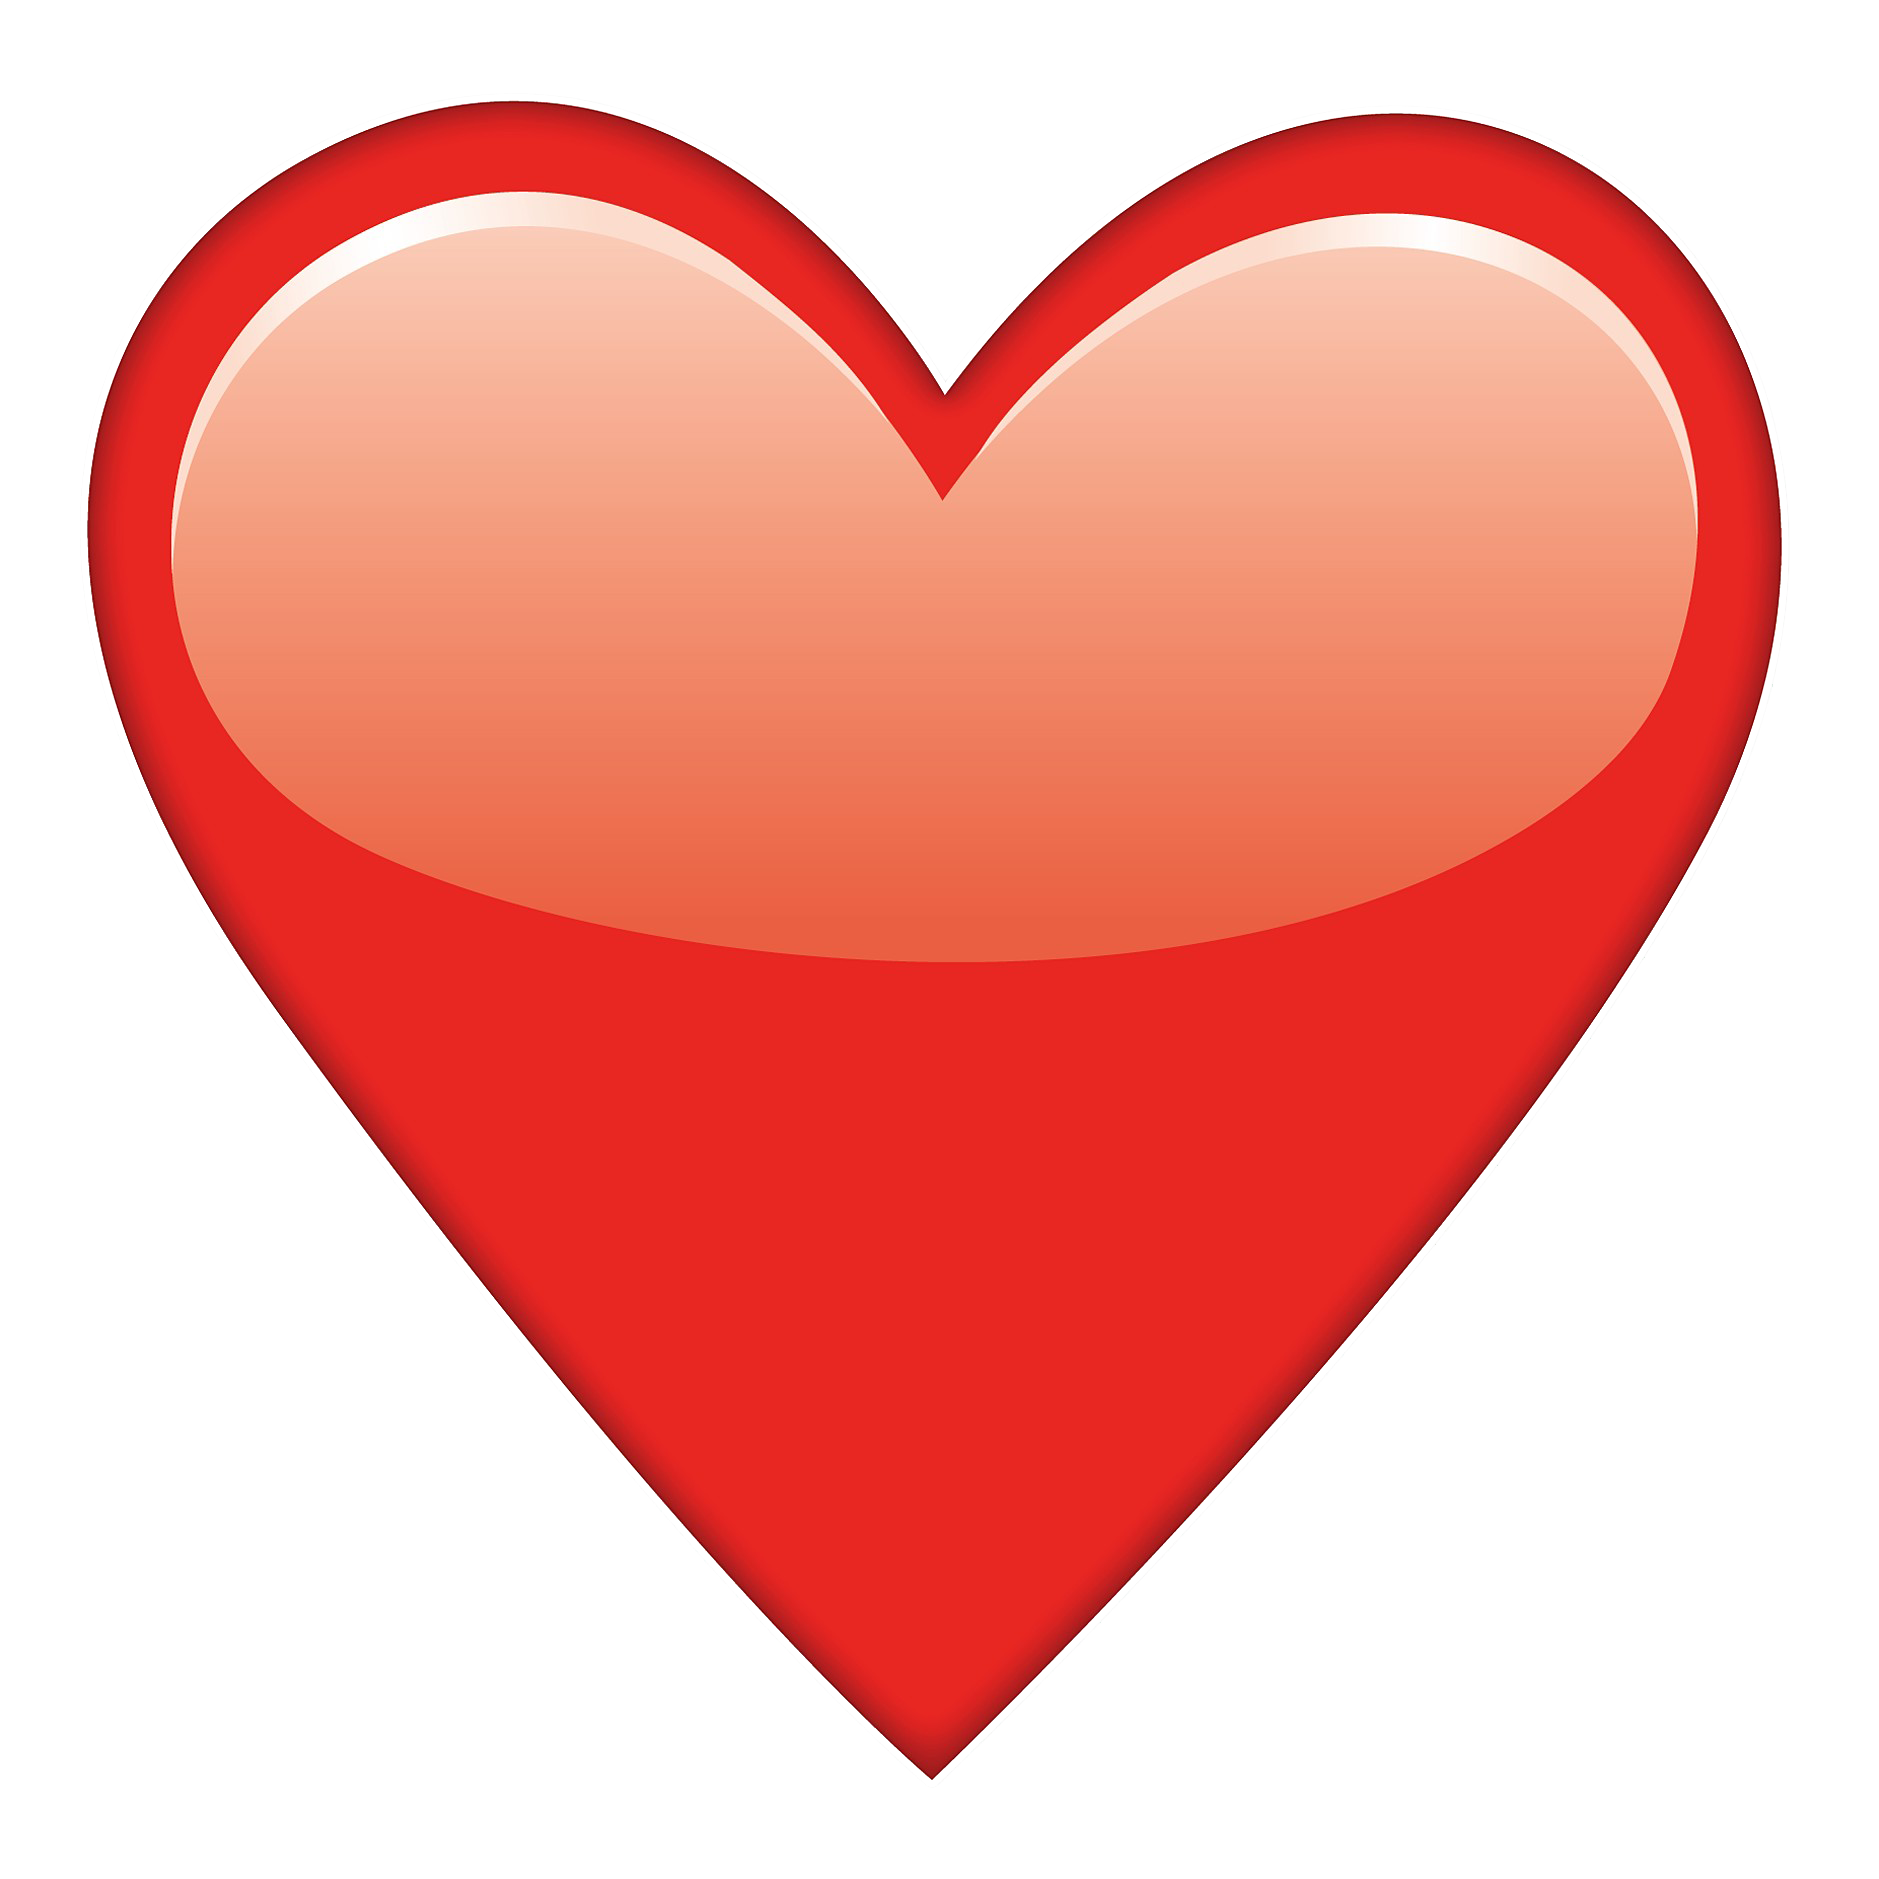 Twitter Emoji cuore PNG immagine sfondo